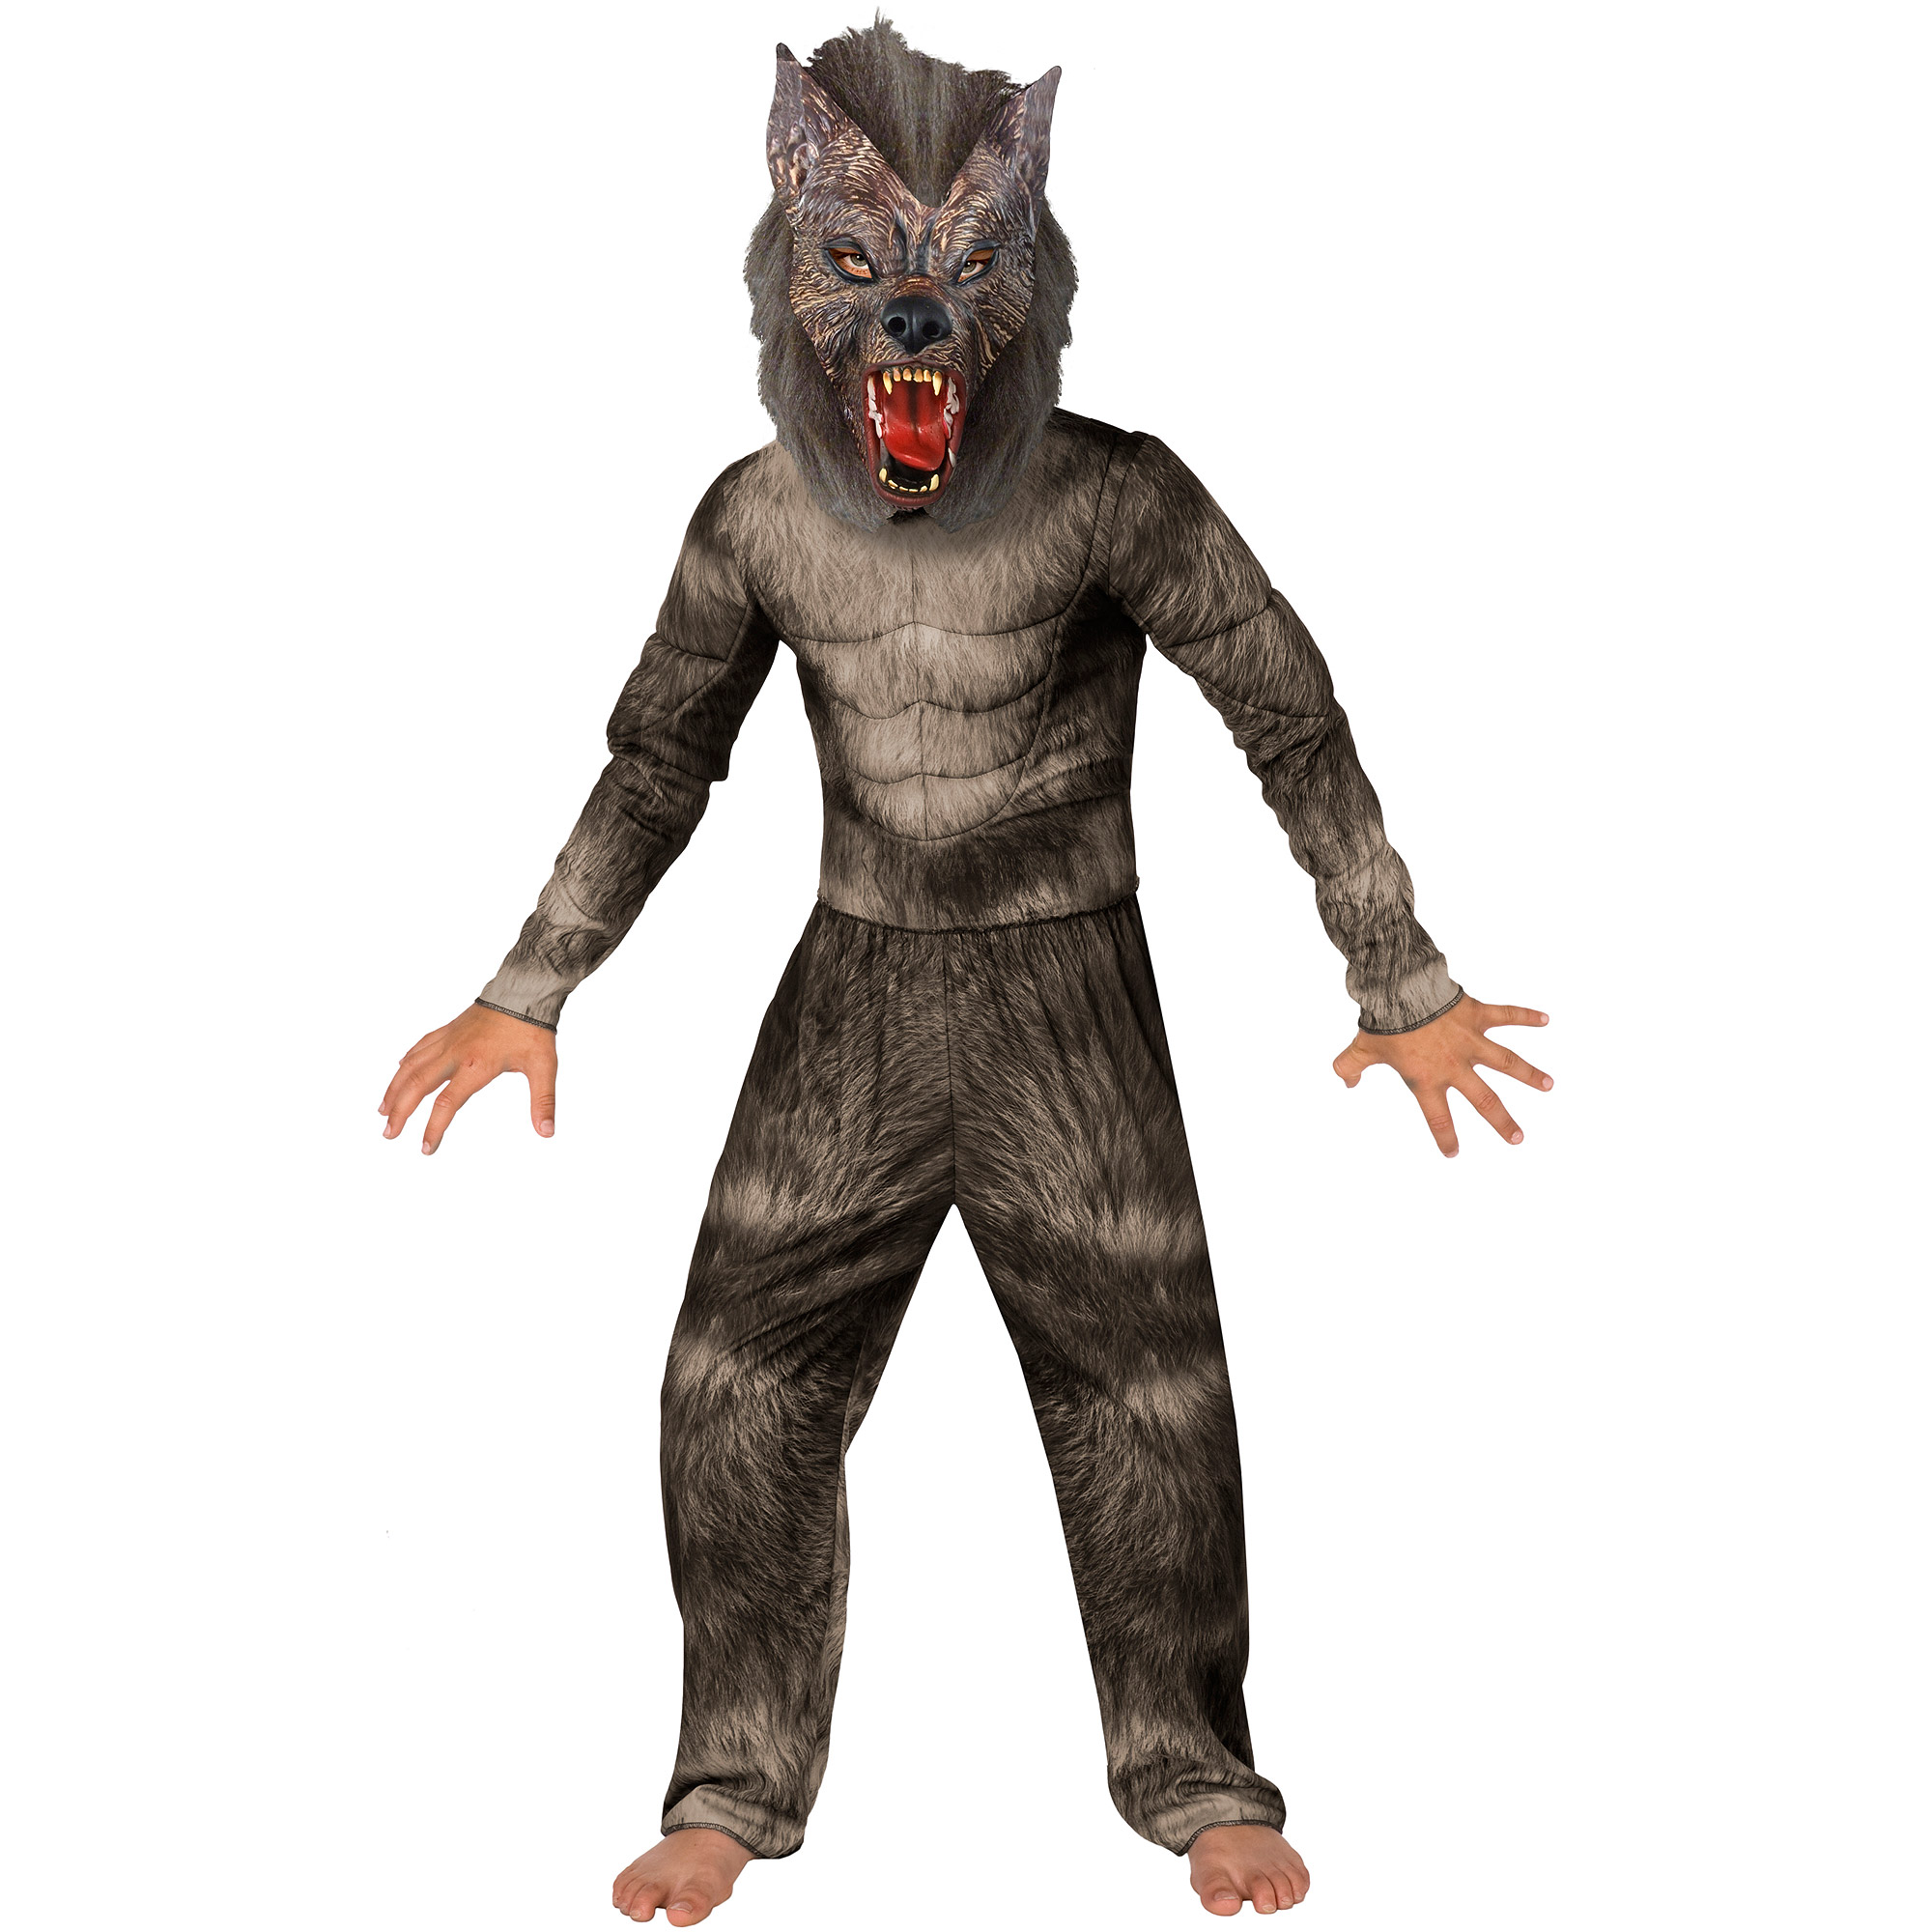 Werewolf Mask Adult Halloween Costume - image 1 of 1